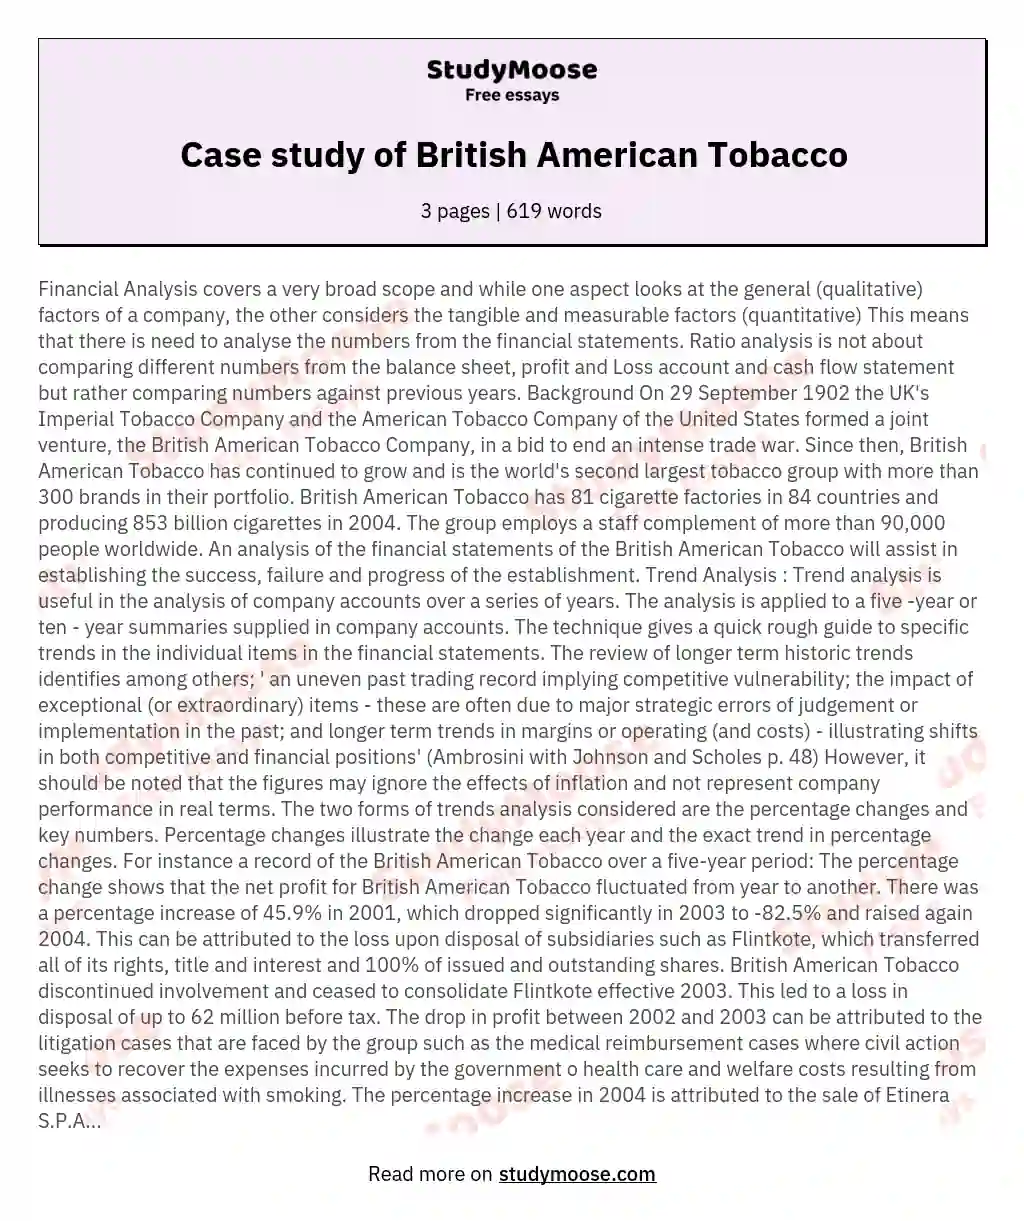 Case study of British American Tobacco